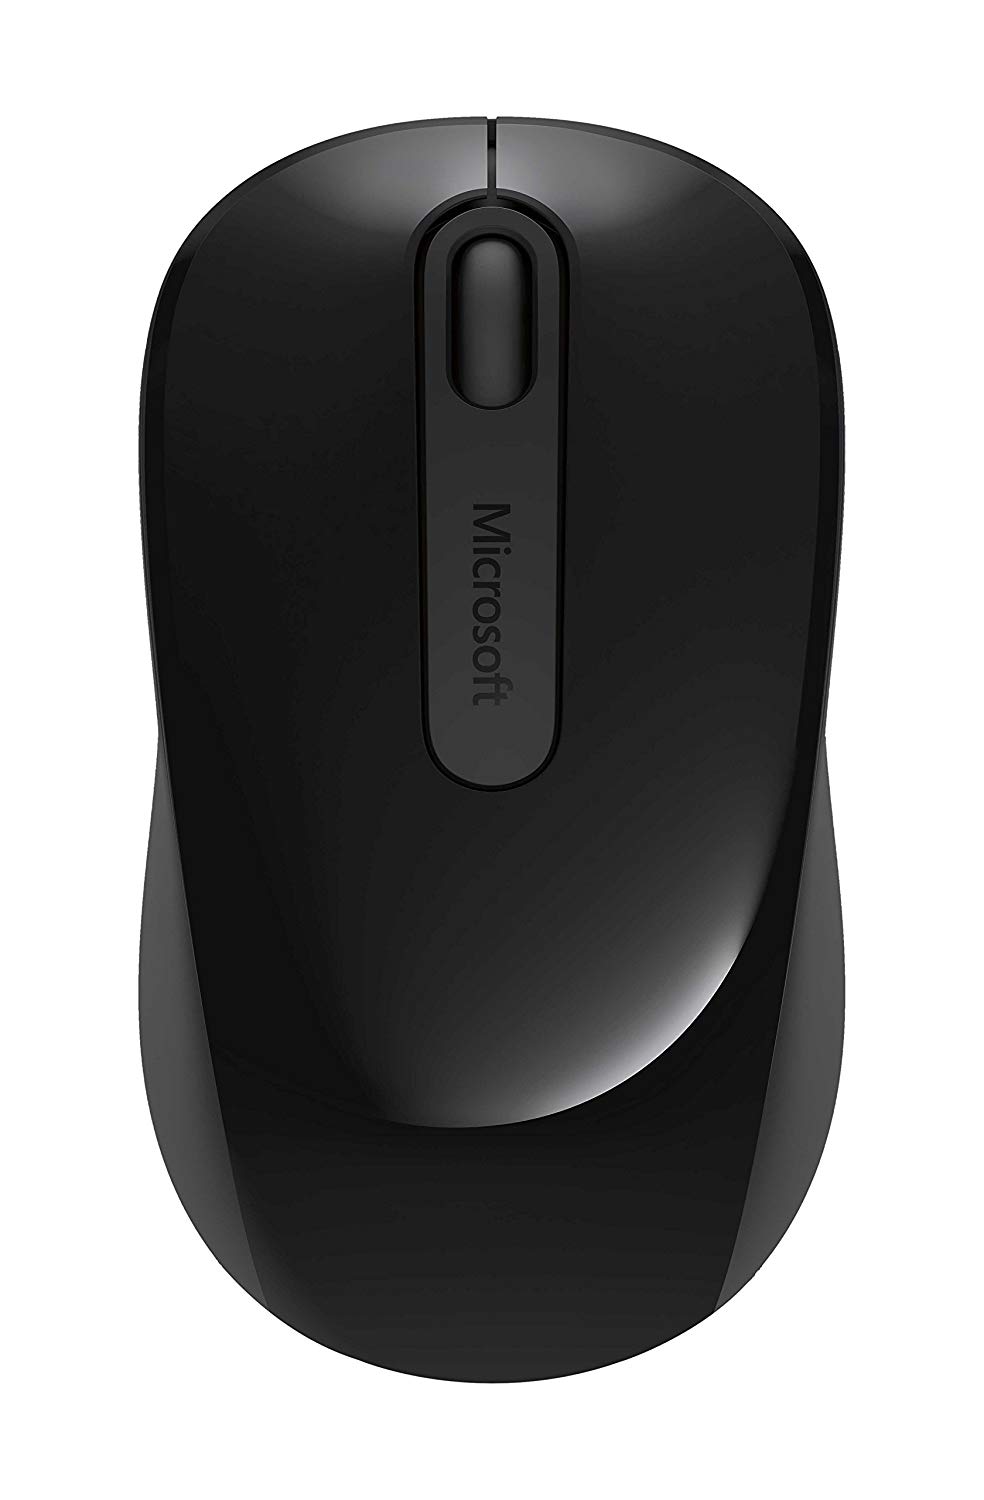 Microsoft Wireless Mouse 900 สีดำ ประกันศูนย์ 3ปี ของแท้ เมาส์ไร้สาย (Black)